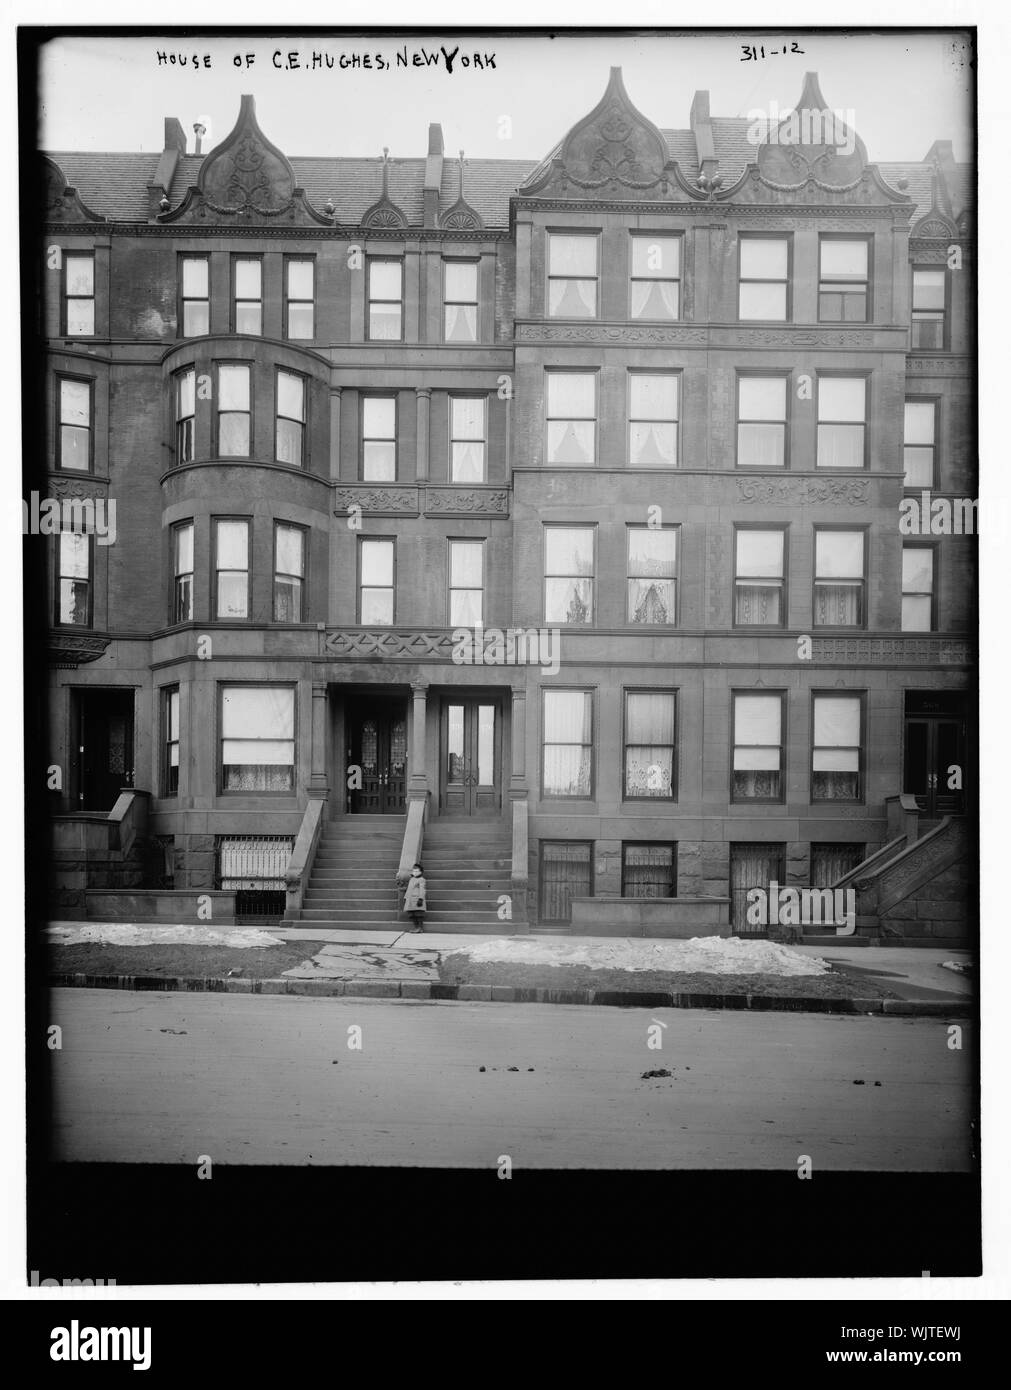 House of C.E. Hughes, N.Y. Stock Photo